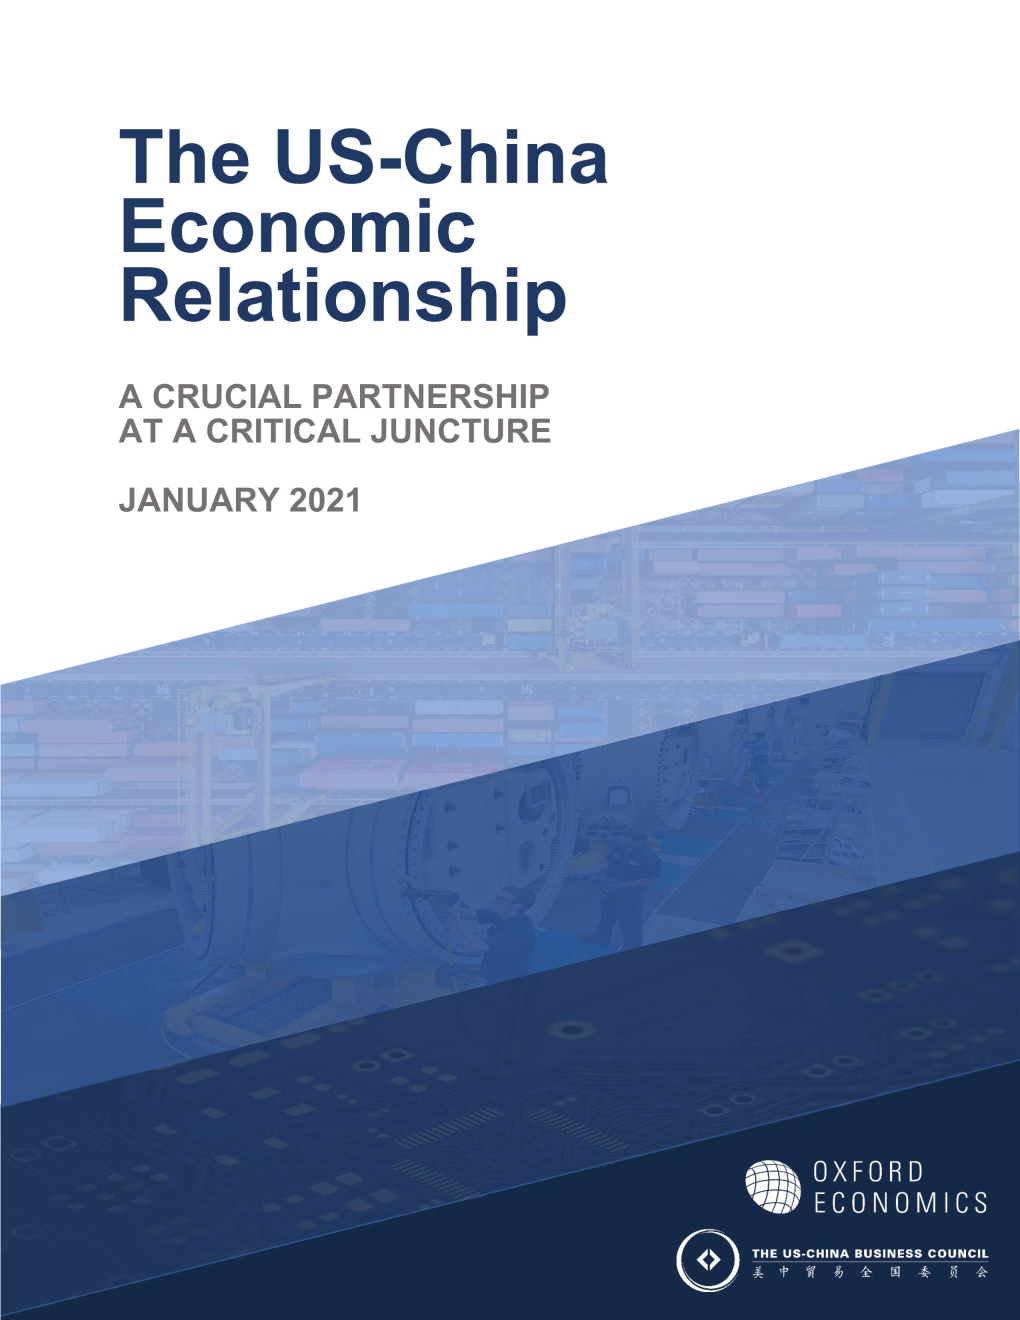 The US-China Economic Relationship